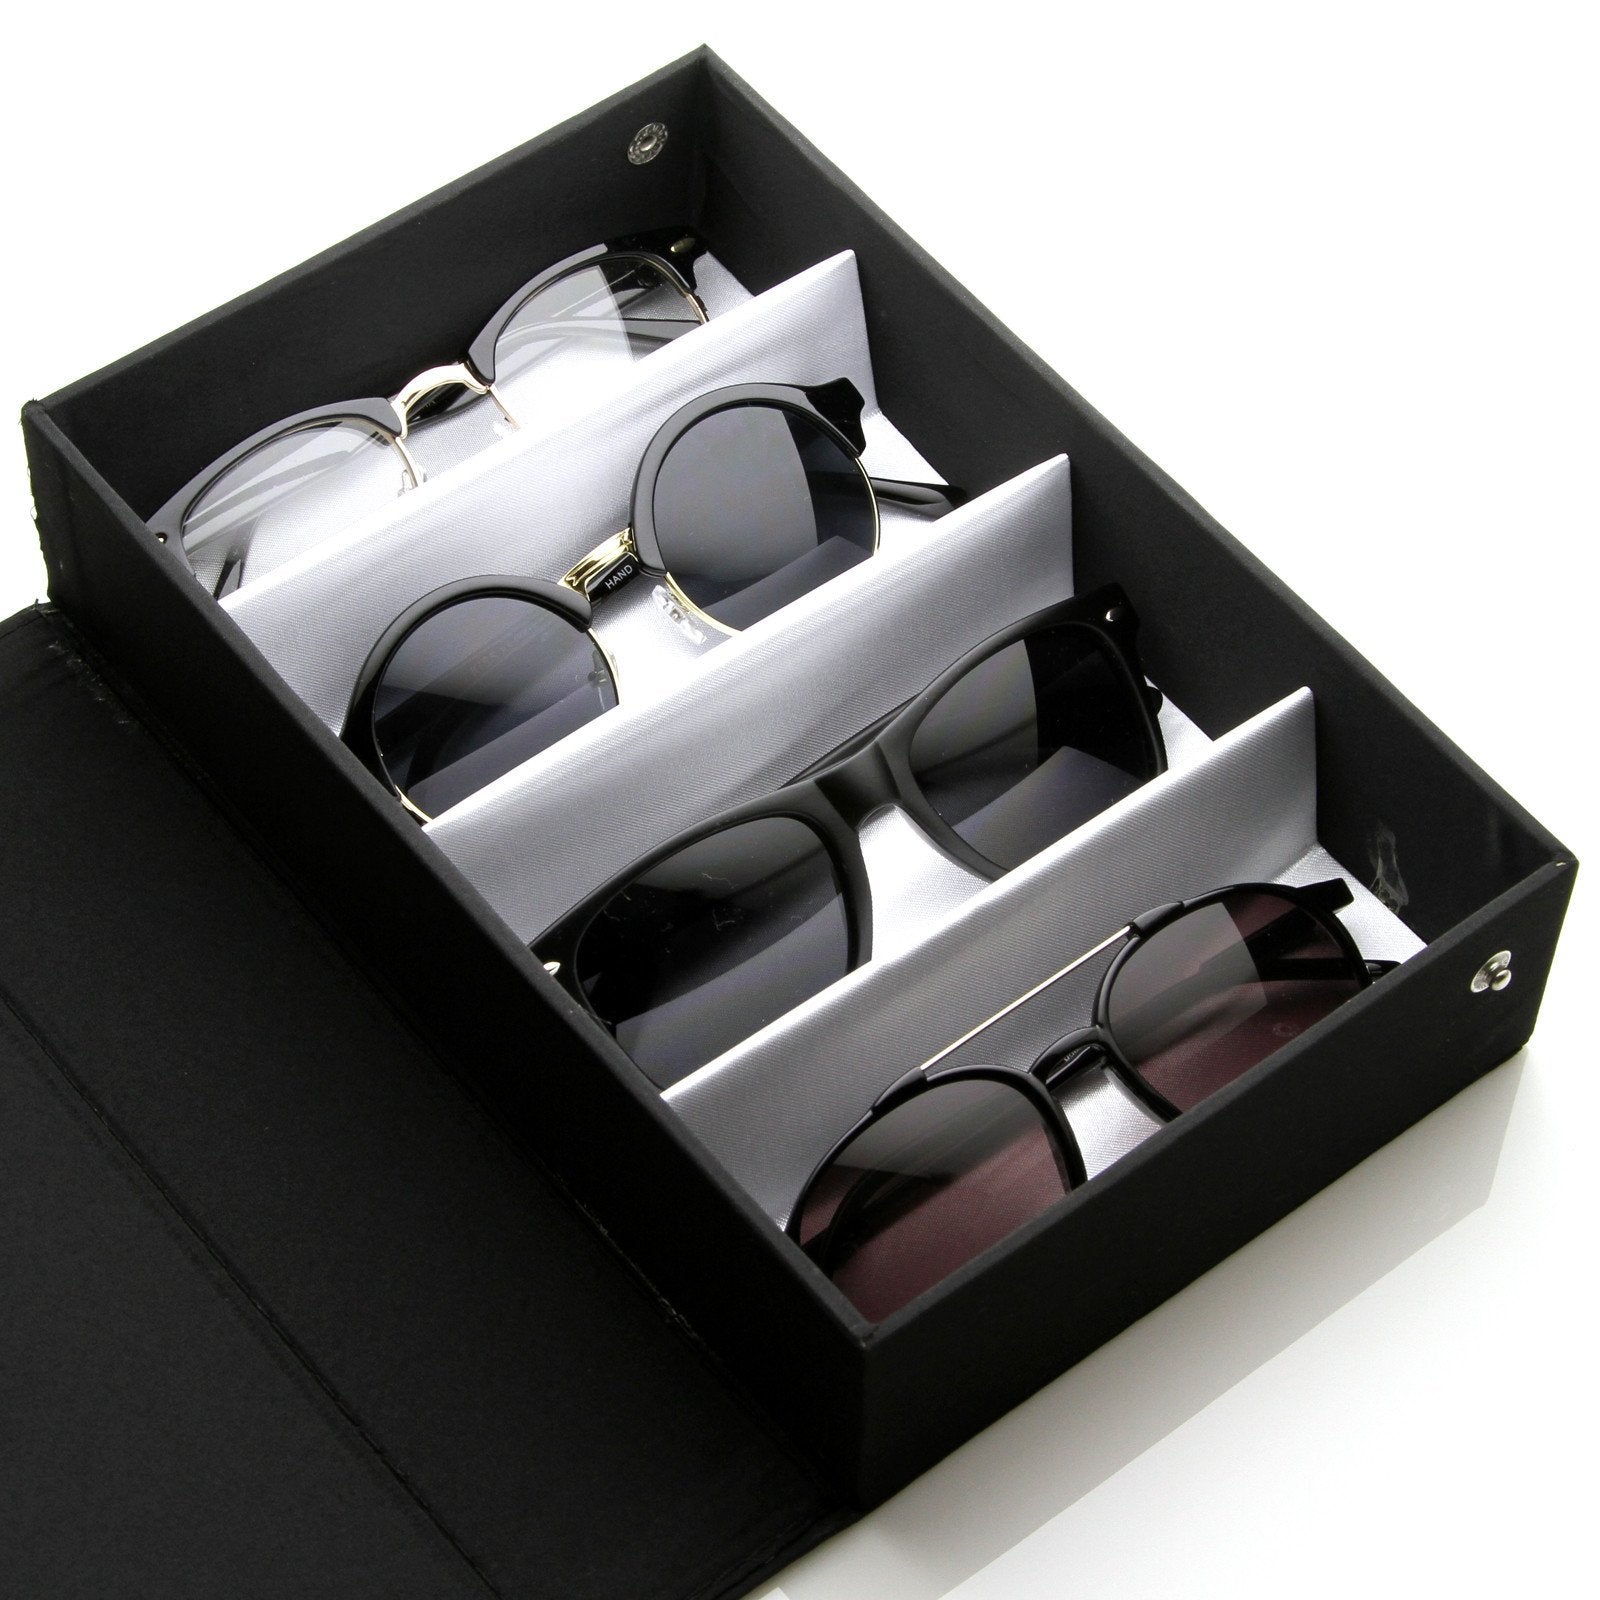 Vinyl Display Eye Wear Sunglasses Travel Carrying Case 4 Piece 1013